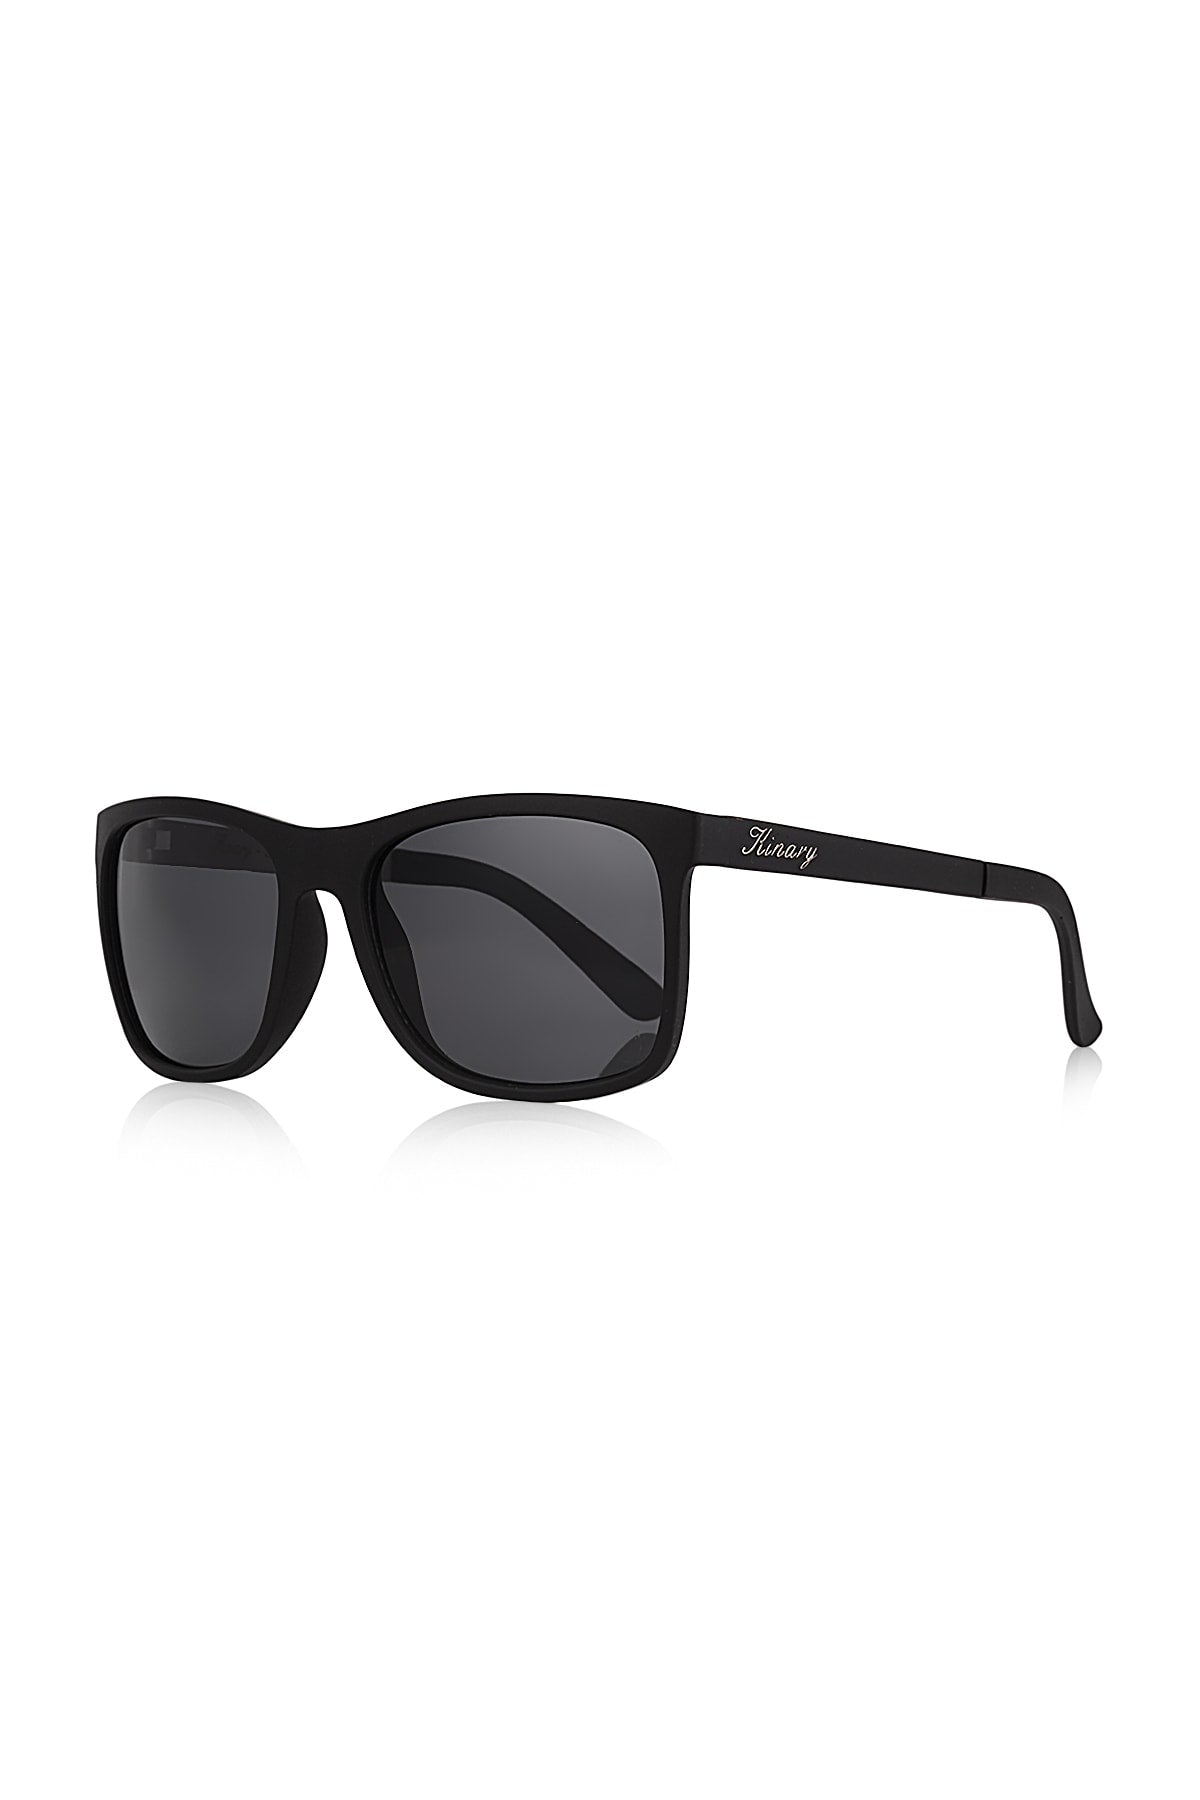 Men's Sunglasses Frame Black Matte Metal Black Handle 2003